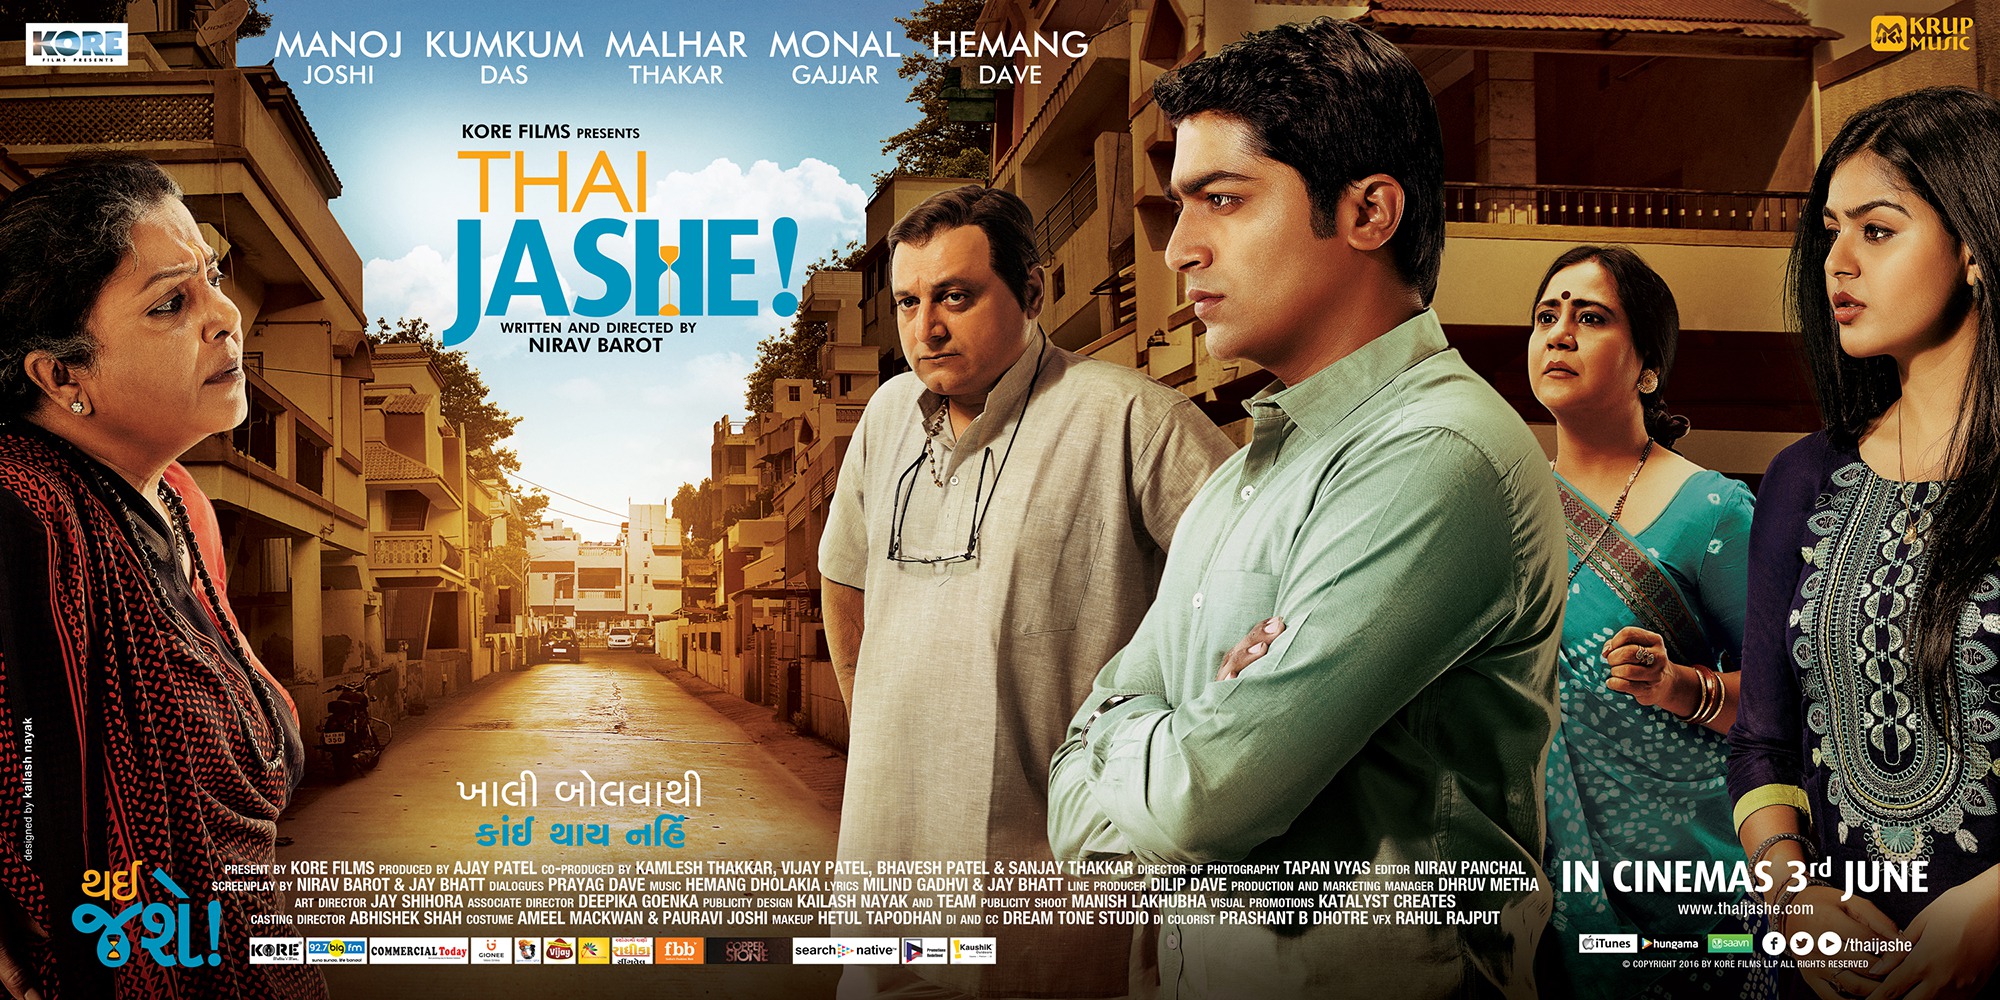 Mega Sized Movie Poster Image for Thai Jashe! (#5 of 5)